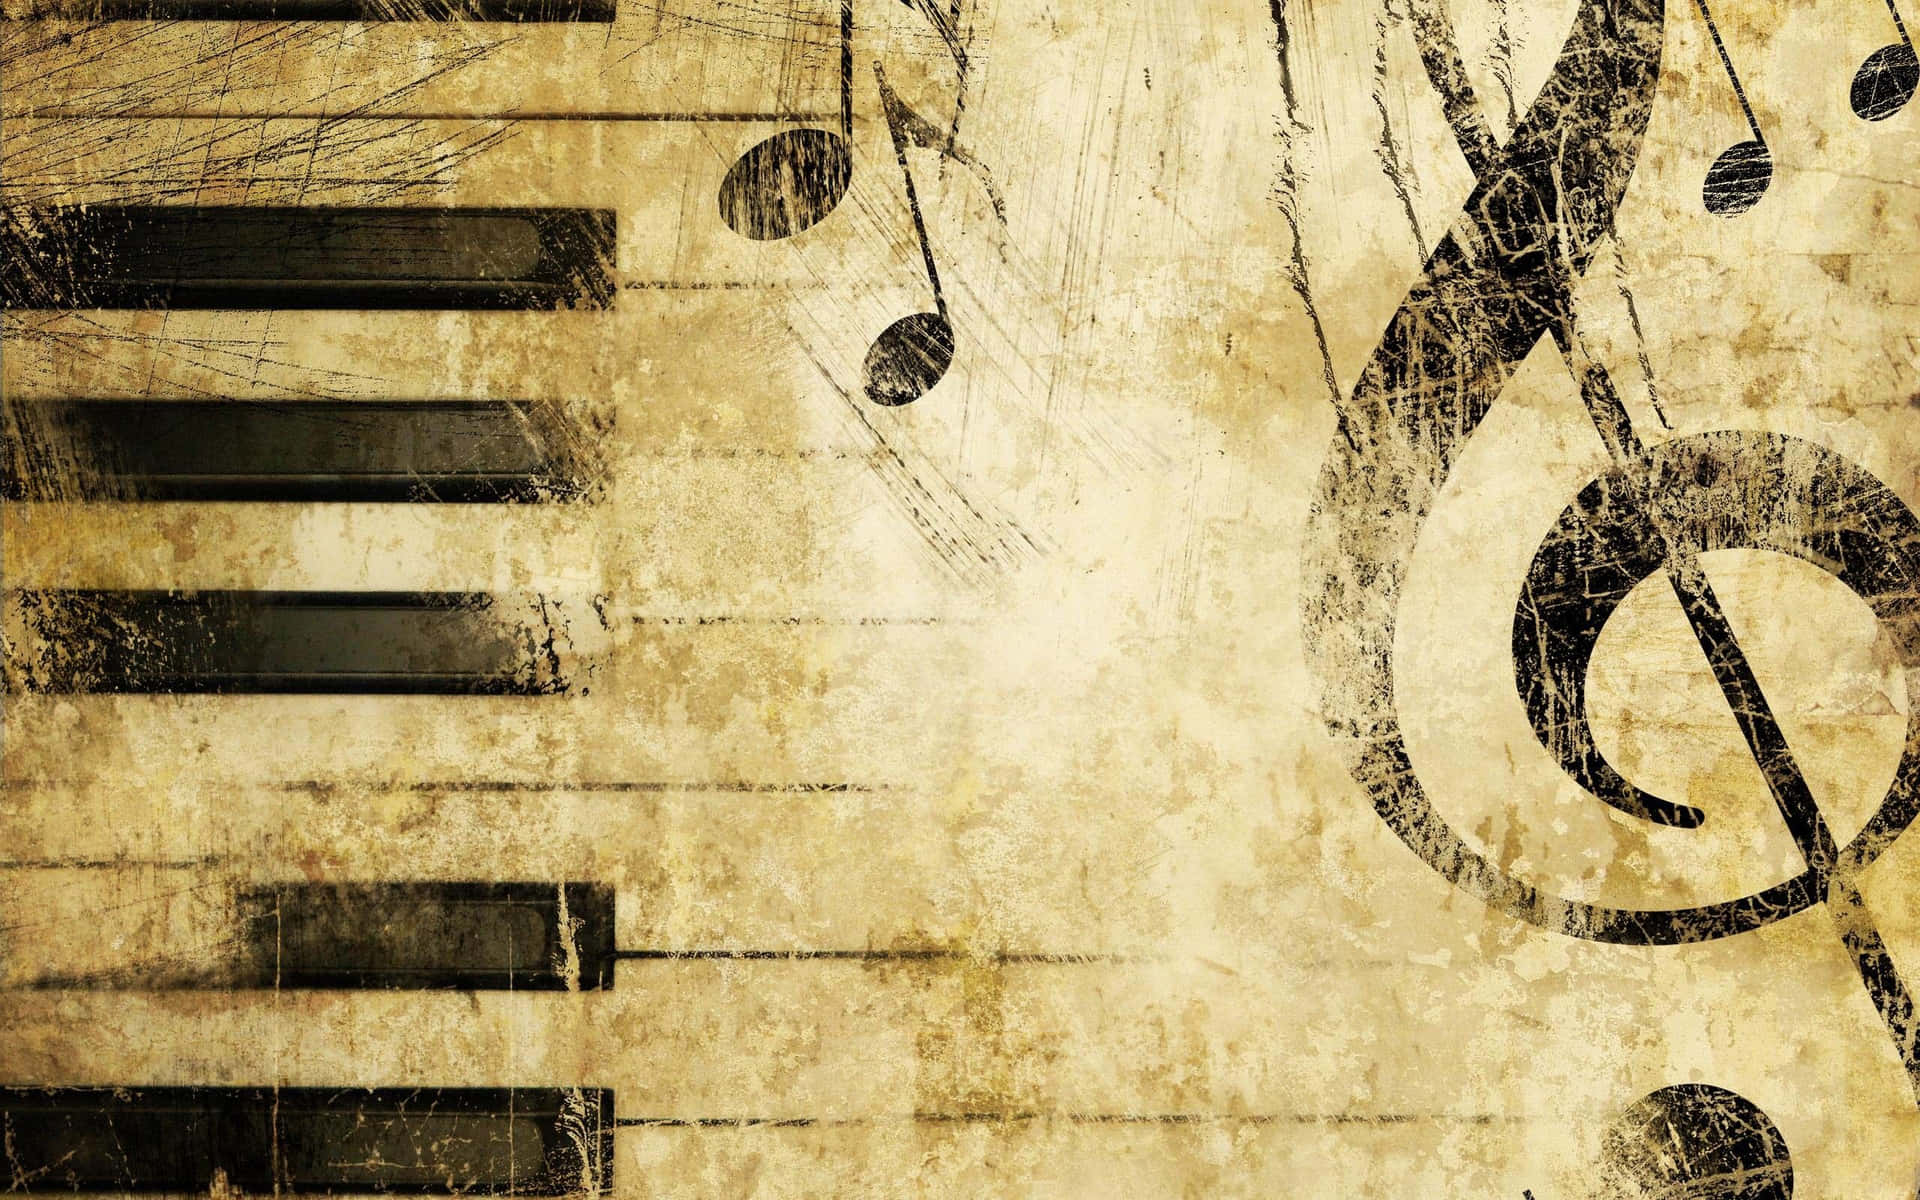 Symphony of Music on Piano Keys